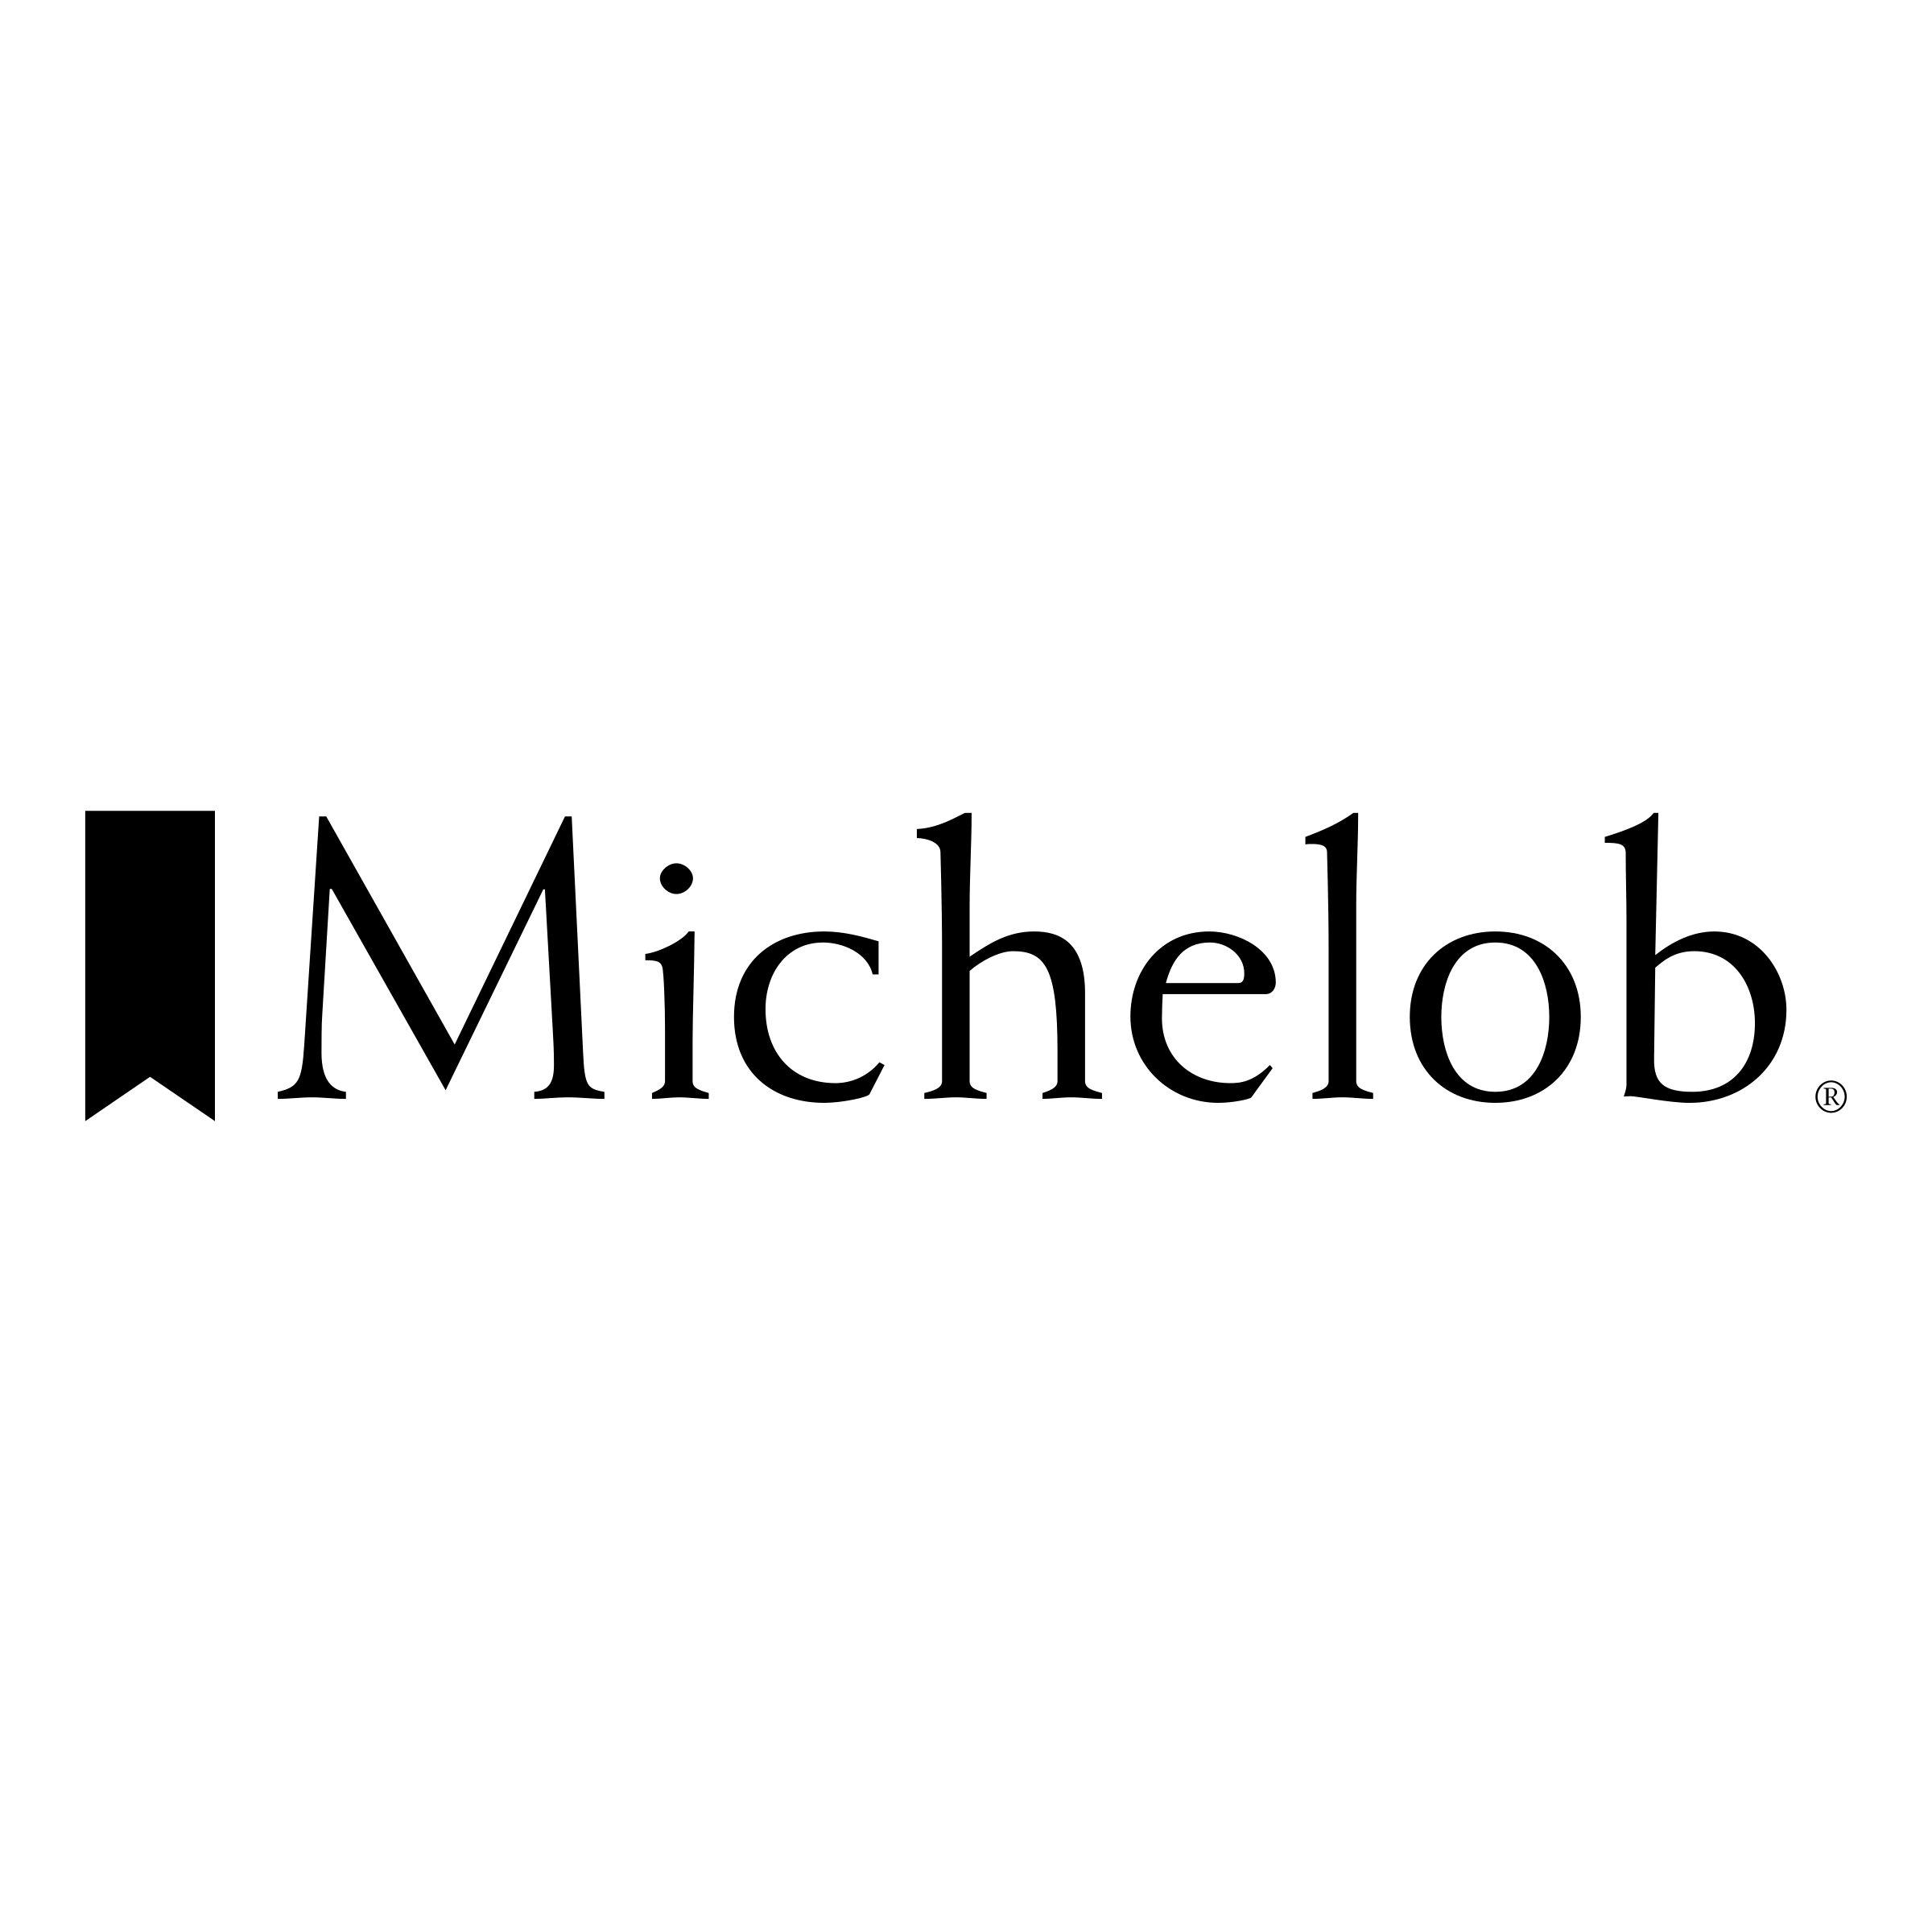 Michelob Logo - Michelob Logo PNG Transparent & SVG Vector - Freebie Supply